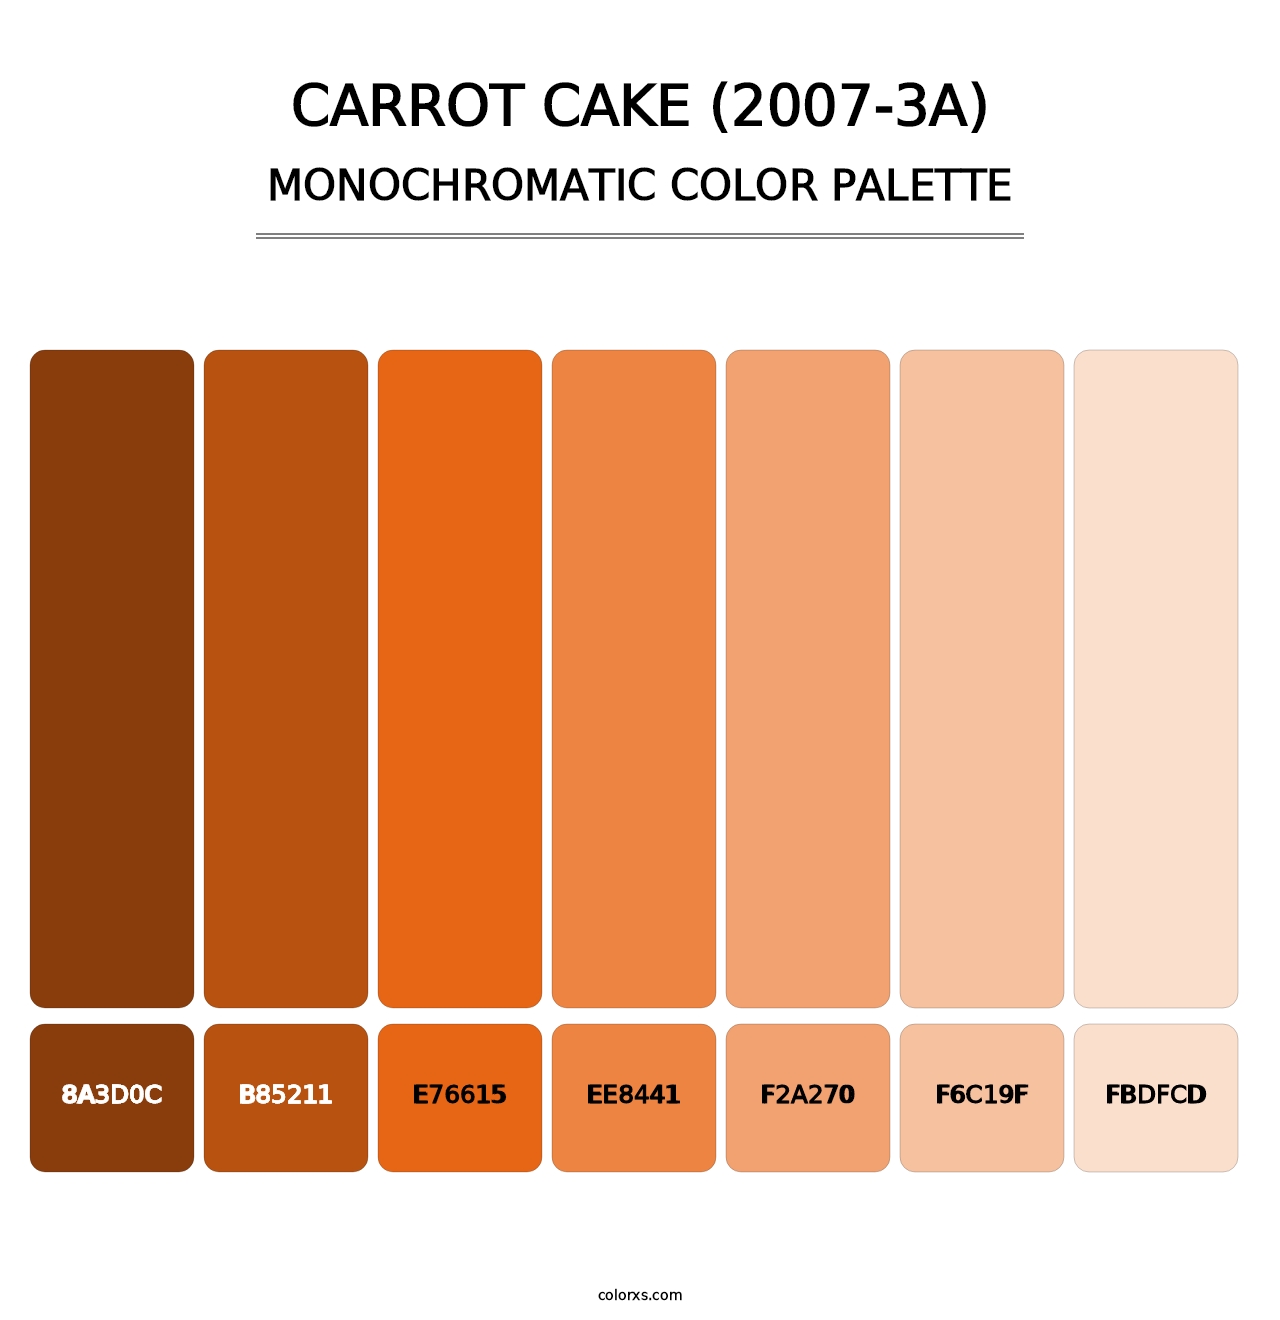 Carrot Cake (2007-3A) - Monochromatic Color Palette